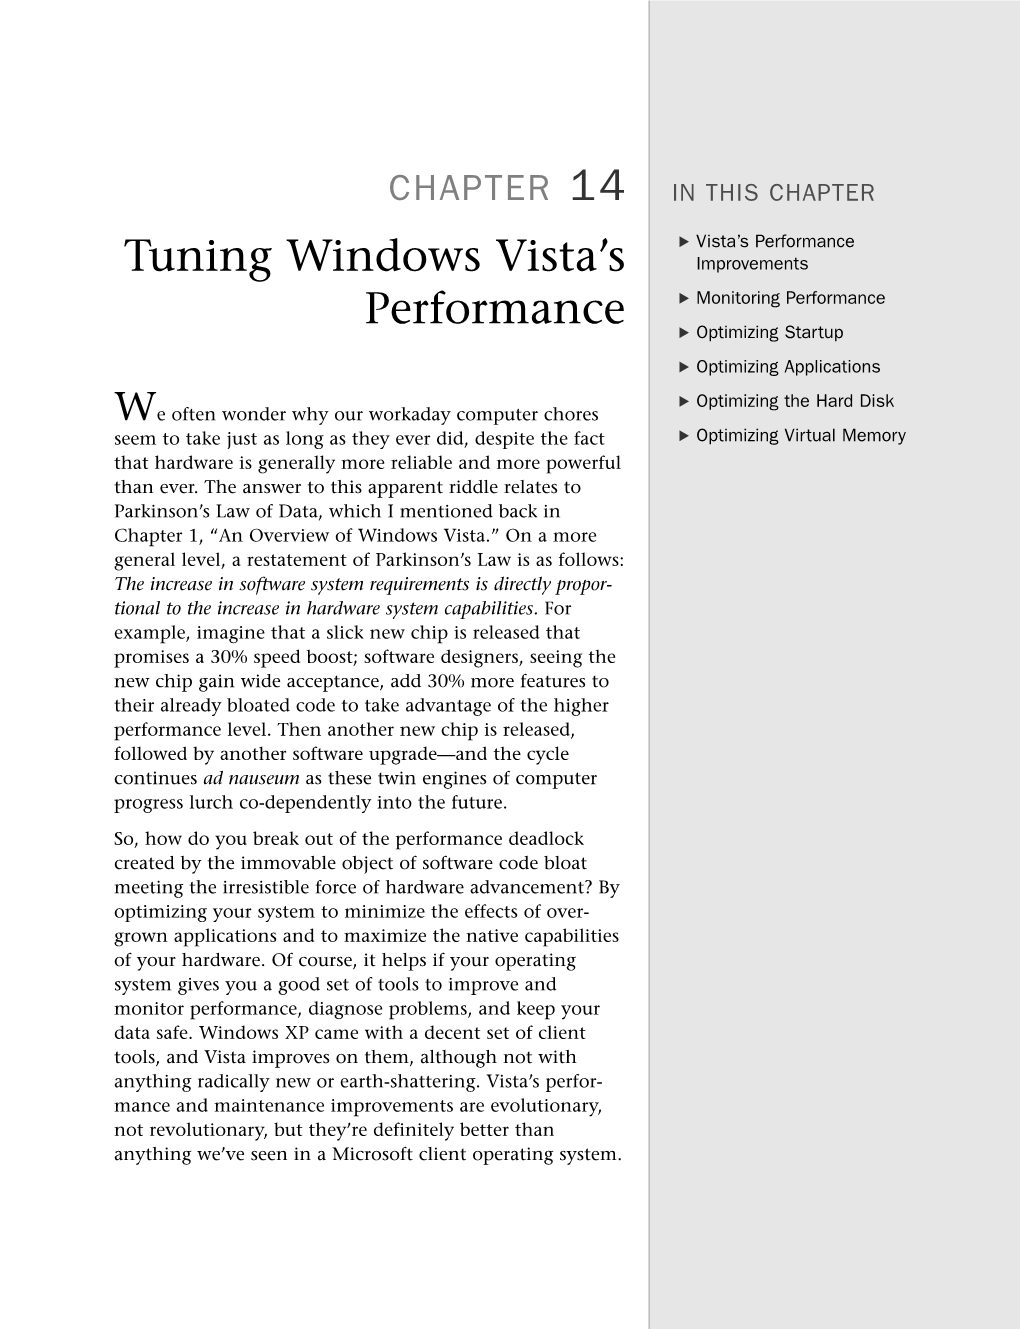 Tuning Windows Vista's Performance